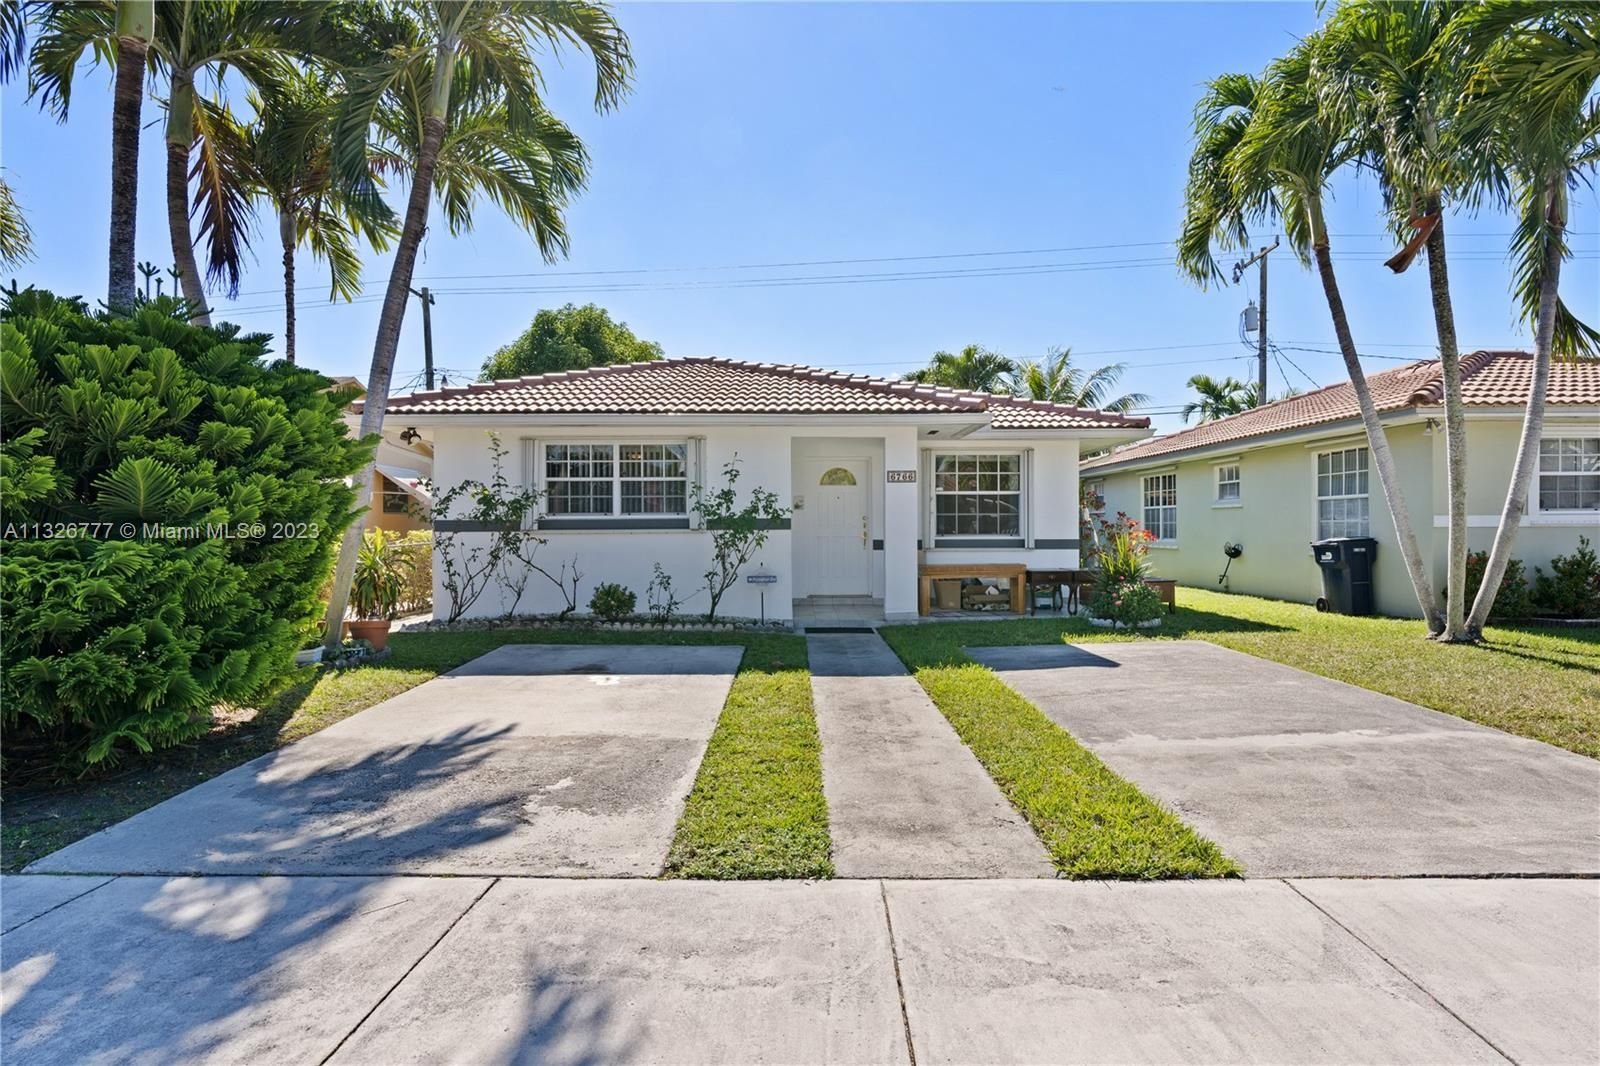 Real estate property located at 6766 25th Ter, Miami-Dade County, Miami, FL